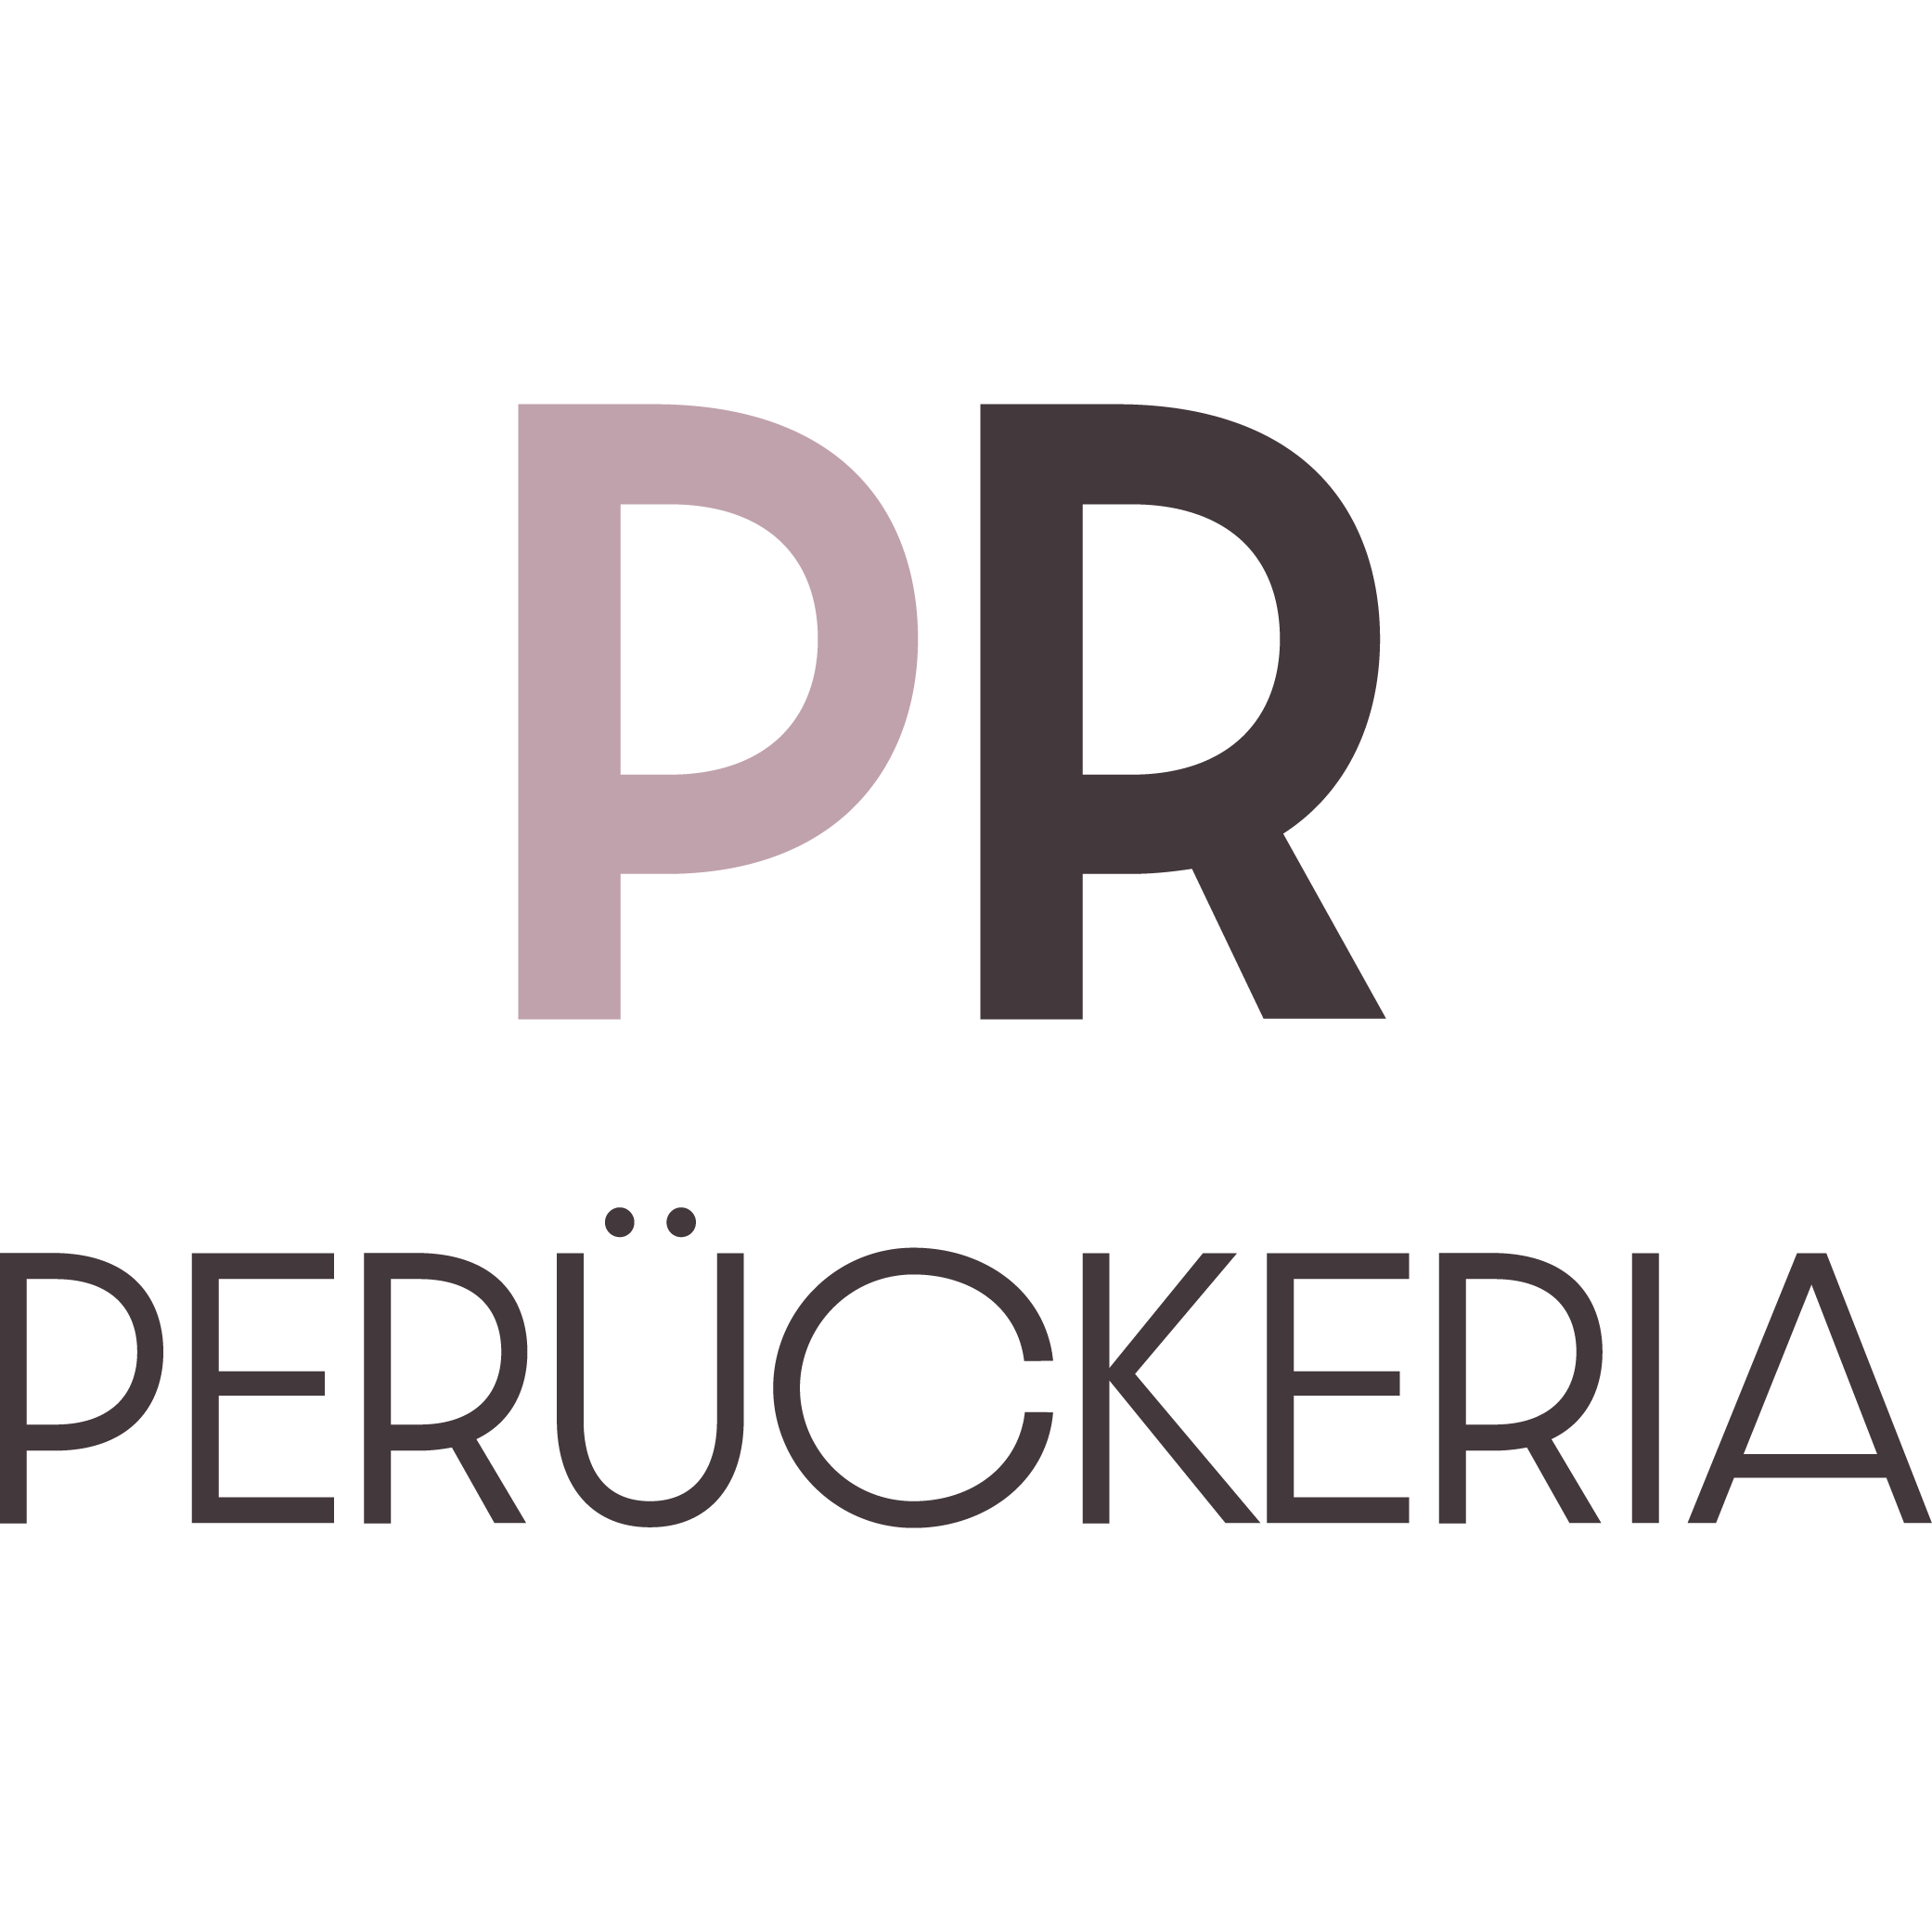 Perückeria by Hairplay GmbH Logo